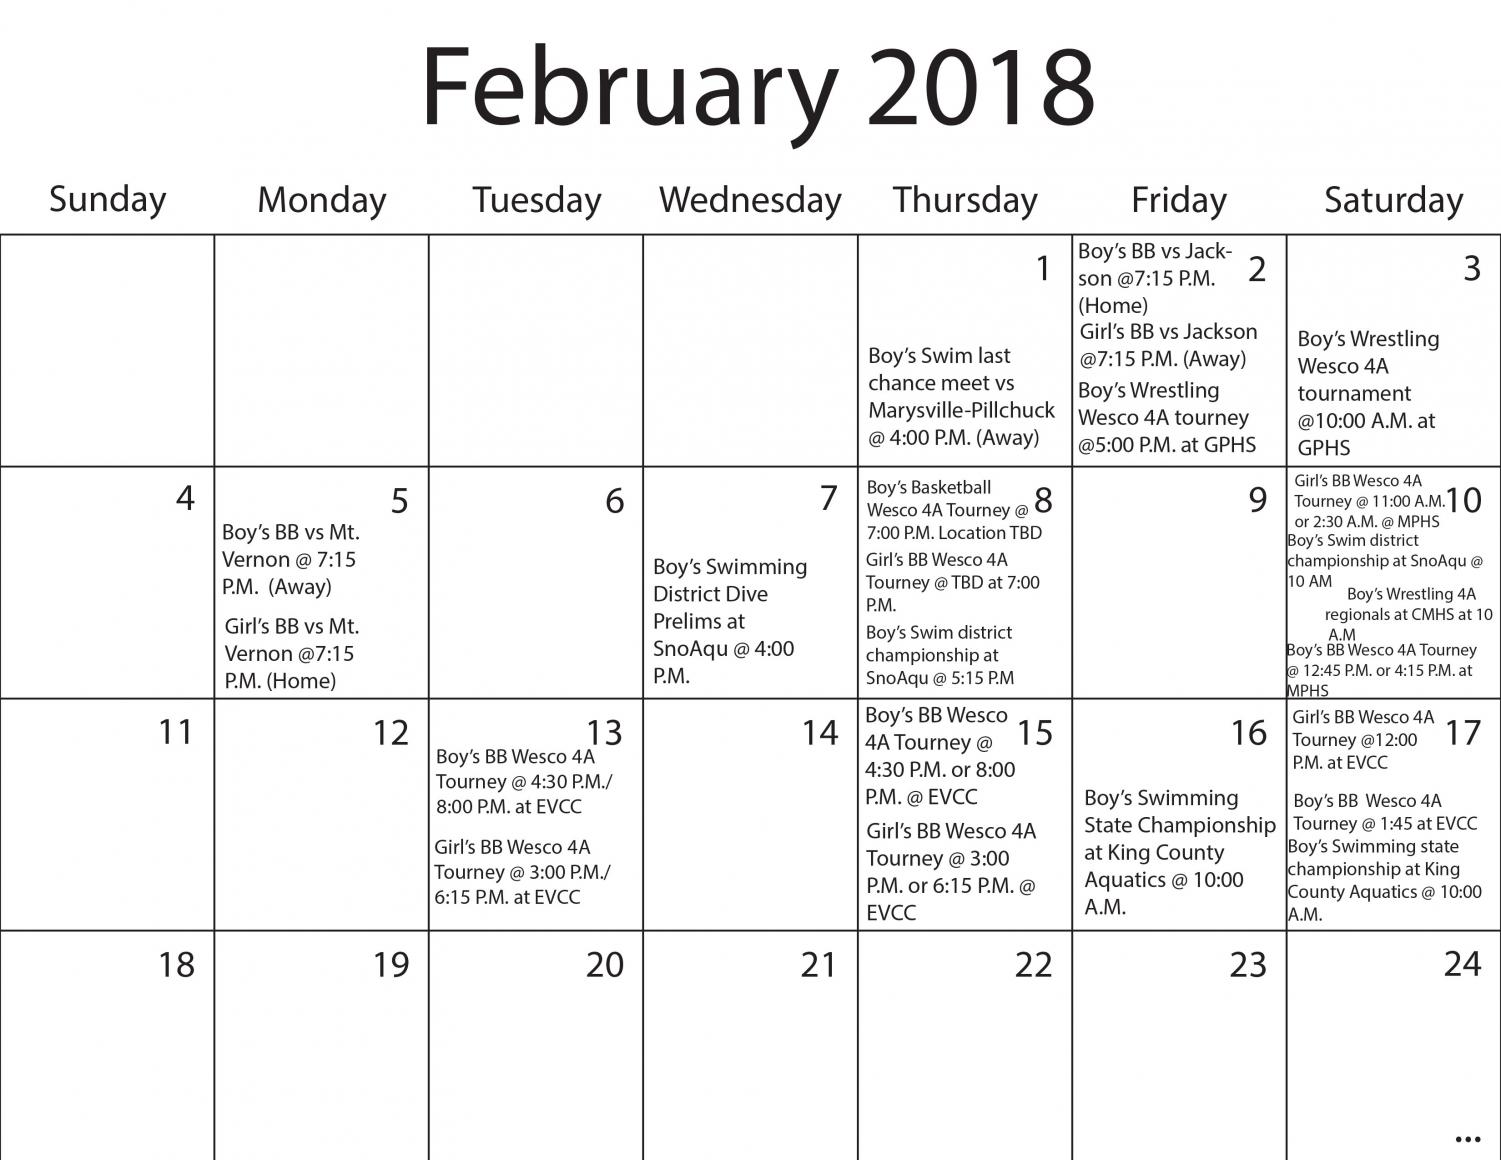 February sports calendar Valhalla